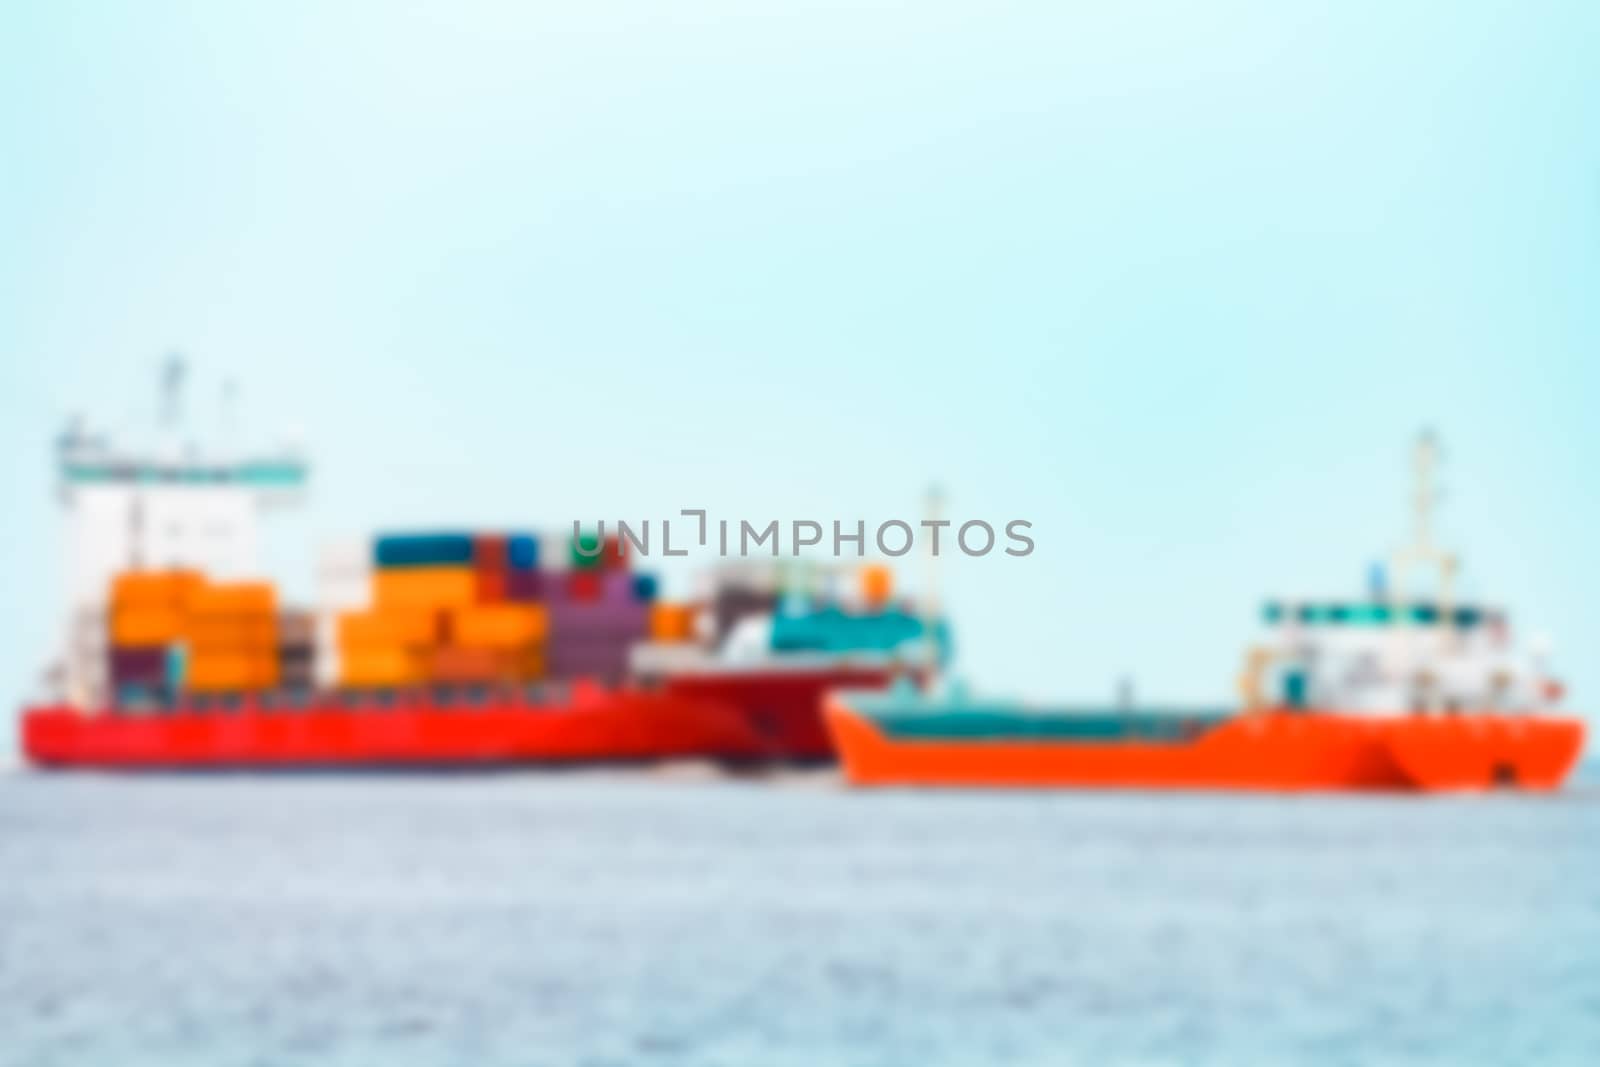 Red cargo ship - soft lens bokeh image. Defocused background